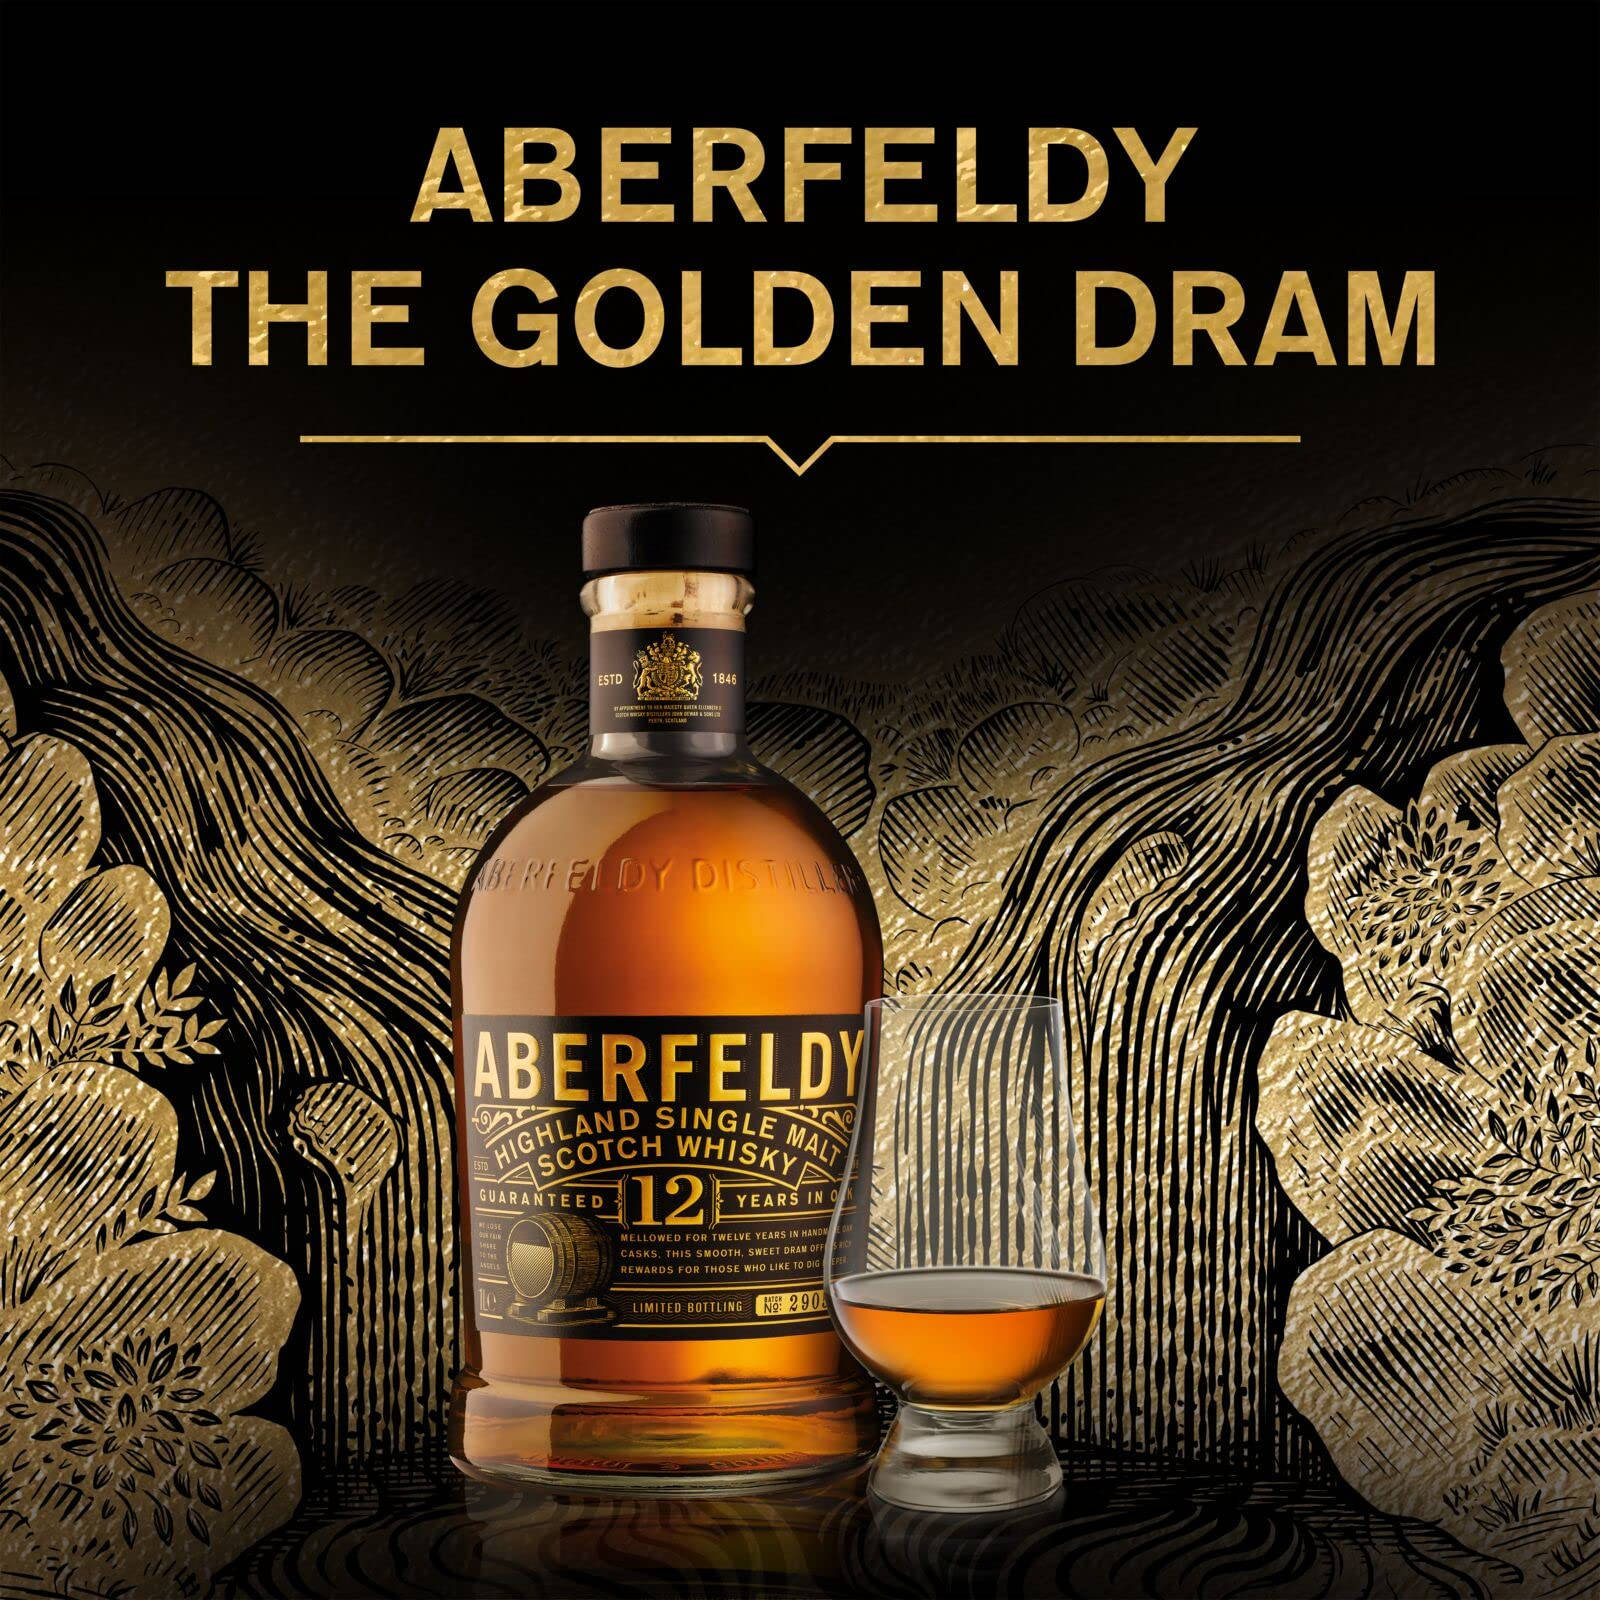 Aberfeldy The Golden Dram Wallpaper